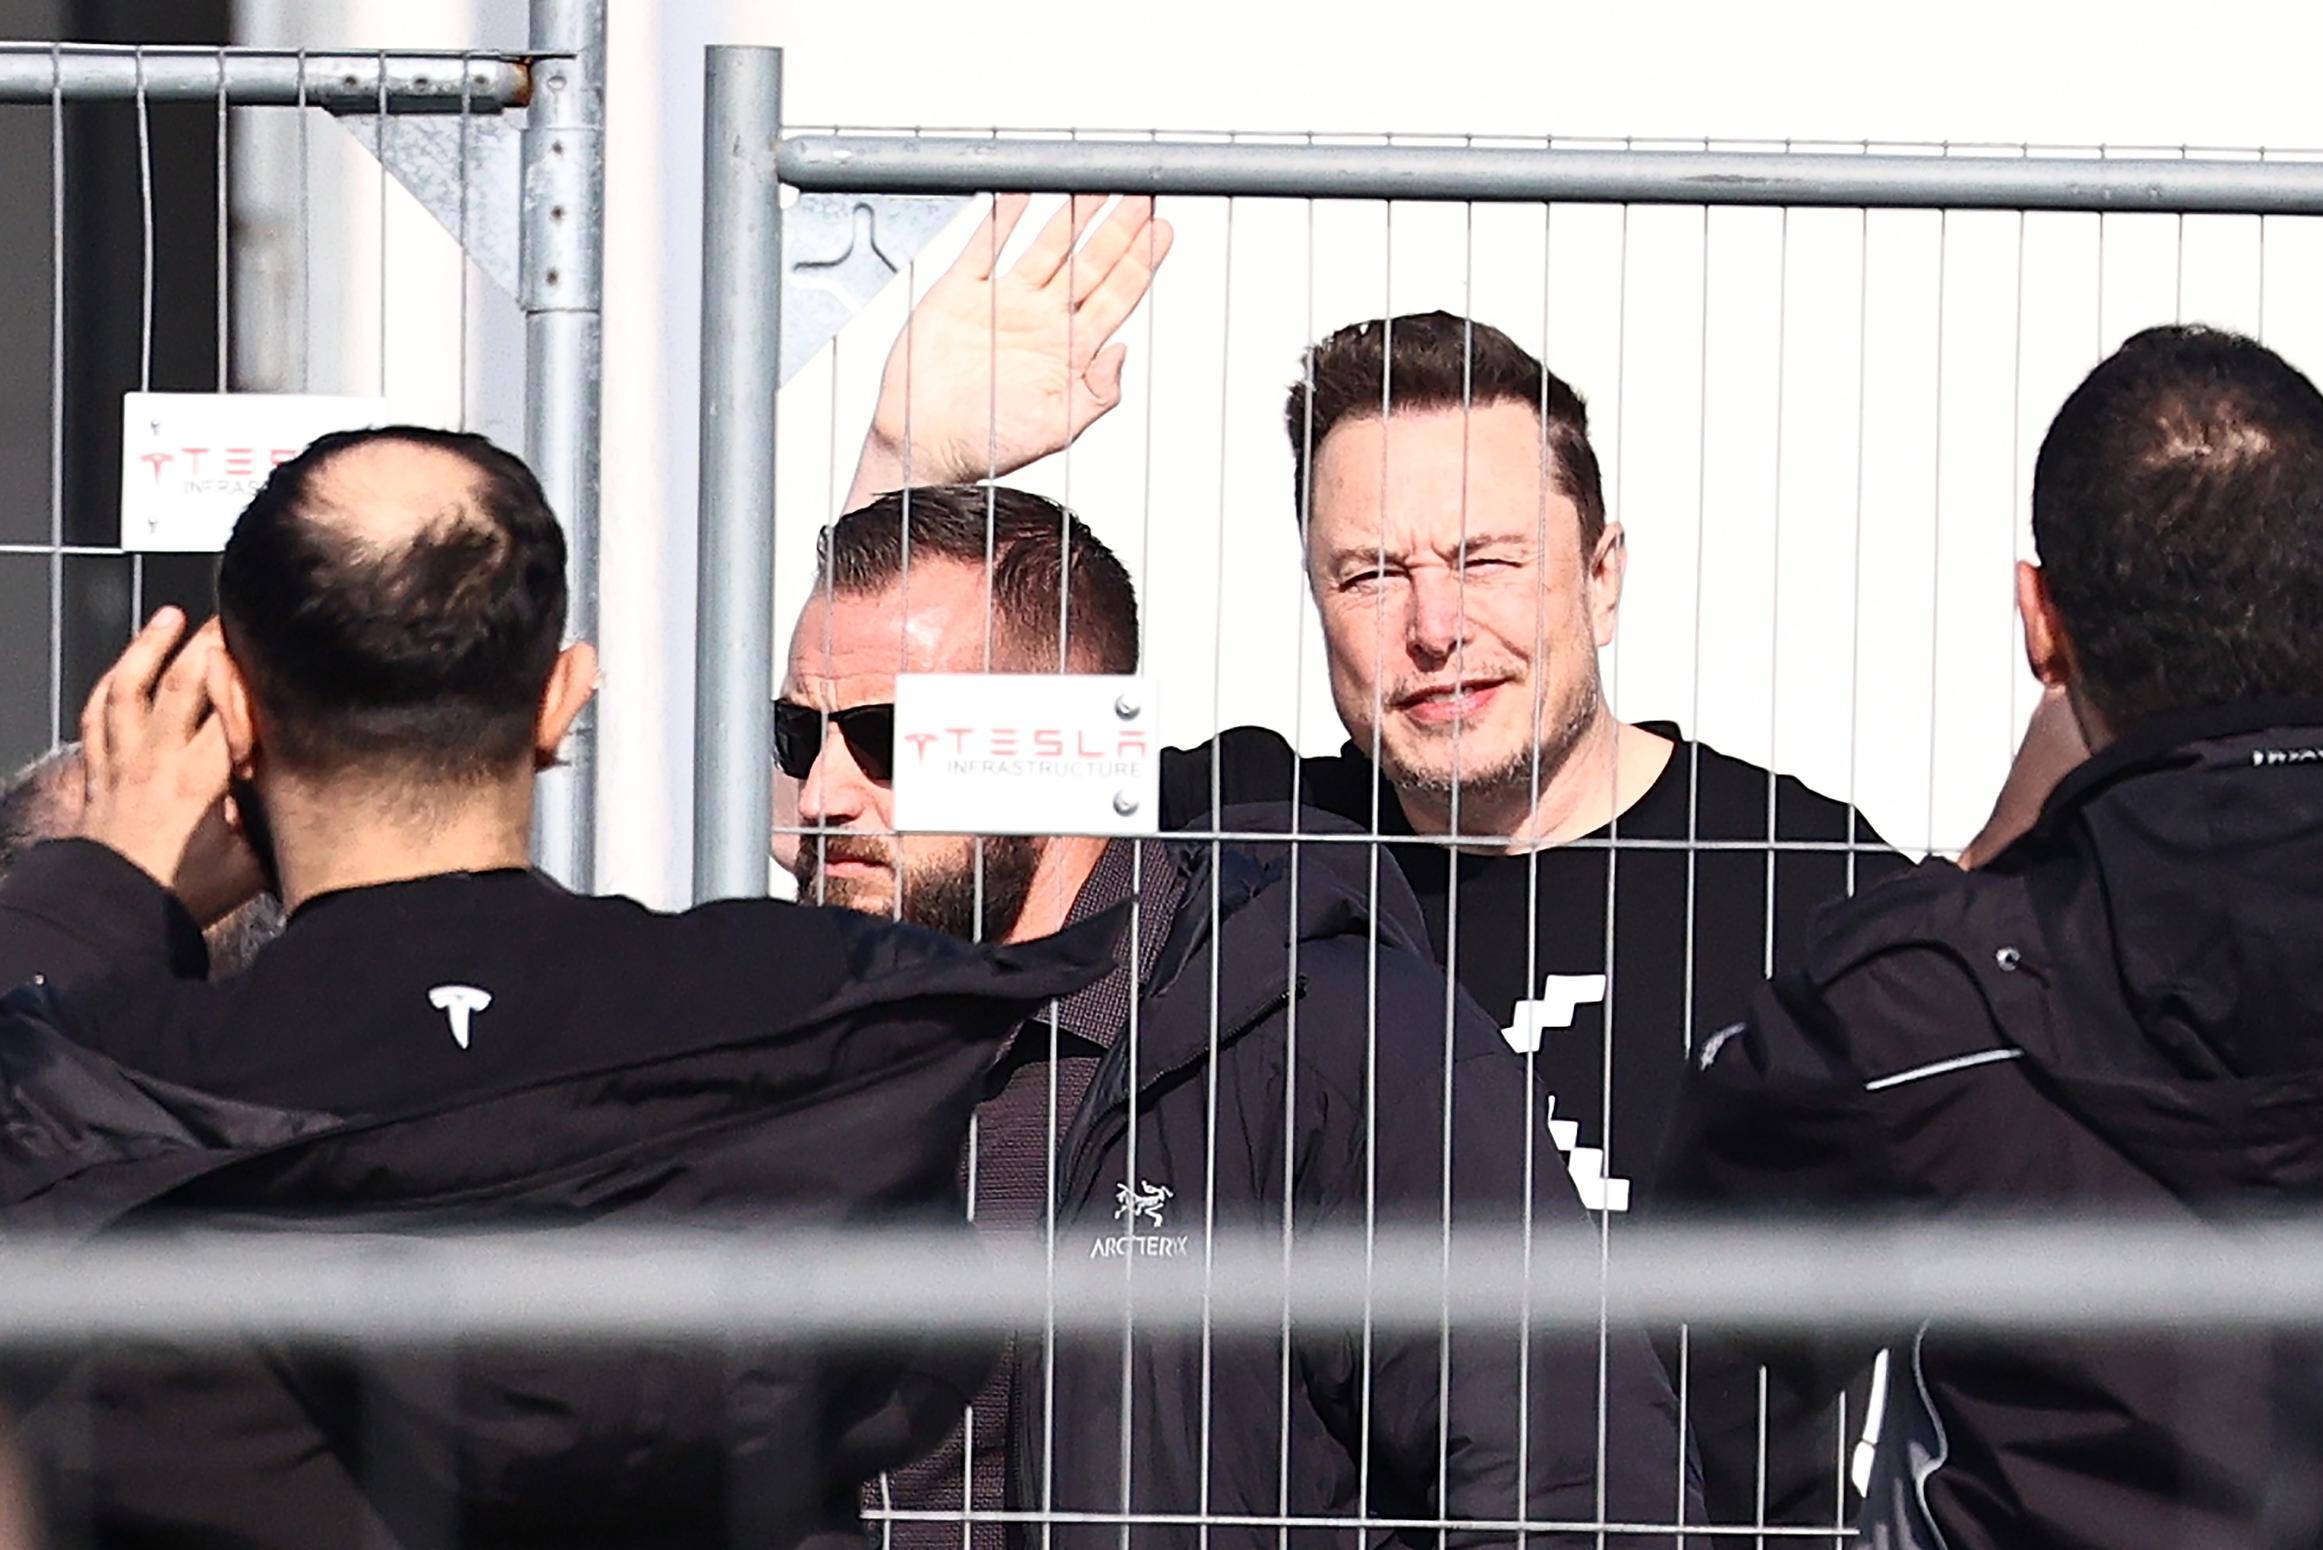 Elon Musk, CEO of Tesla, Visits German Factory After Sabotage: “I’m Here to Back You Up”